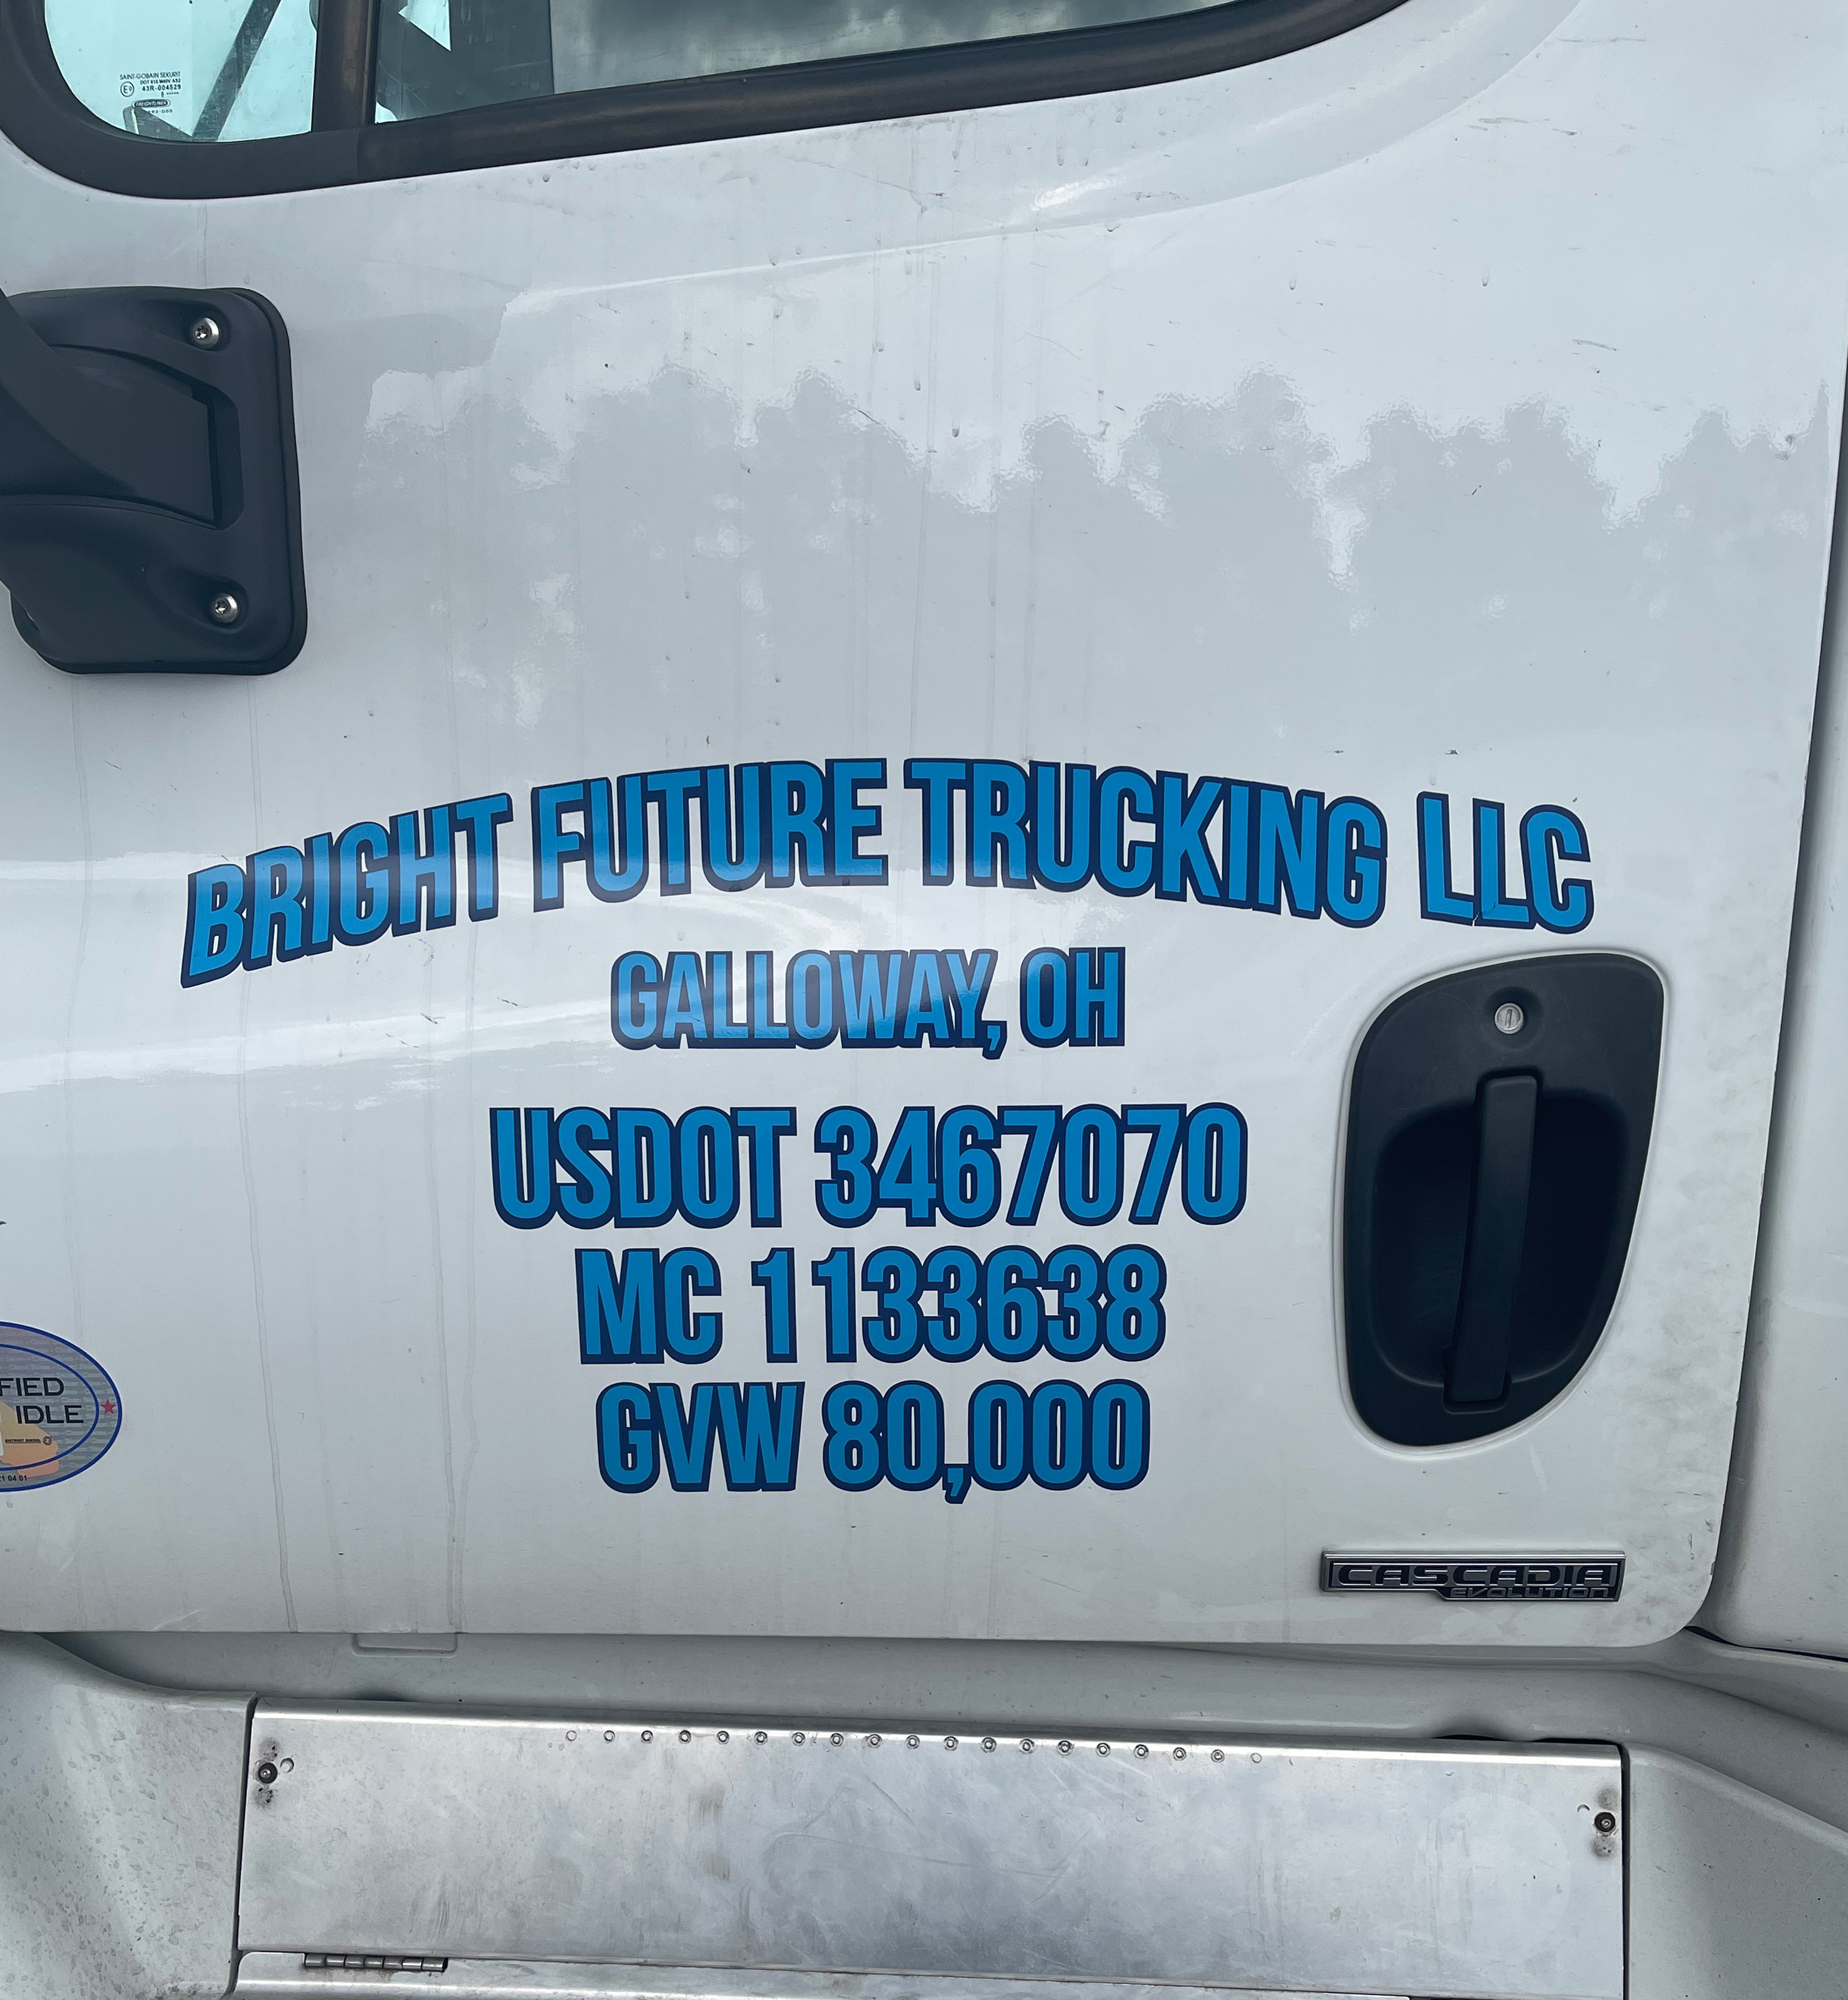 usdot compliance truck decal sticker lettering on a white truck door semi truck